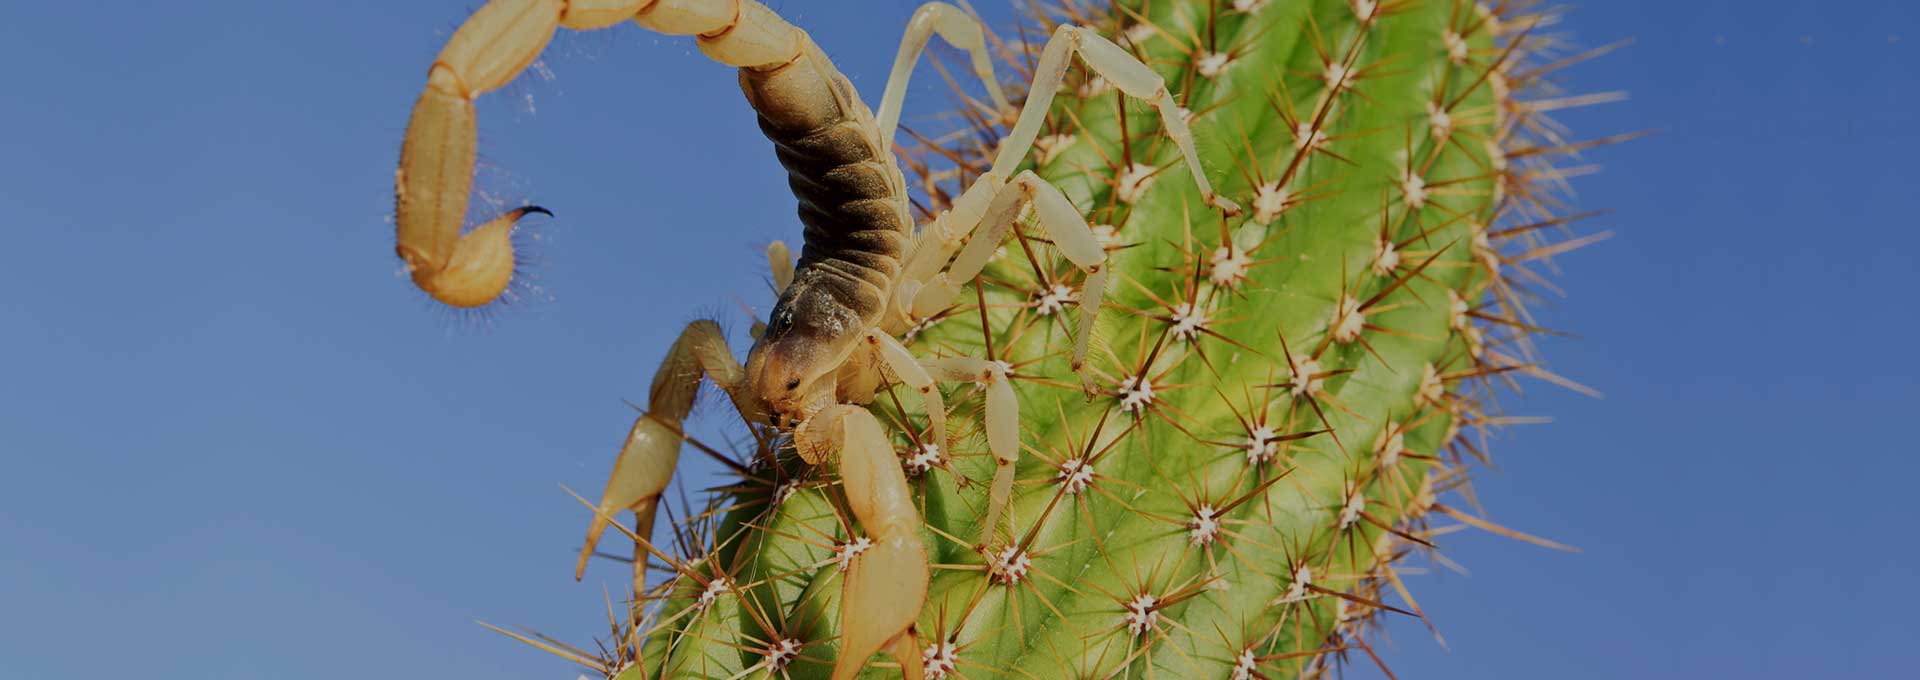 Scorpion Removal Phoenix AZ